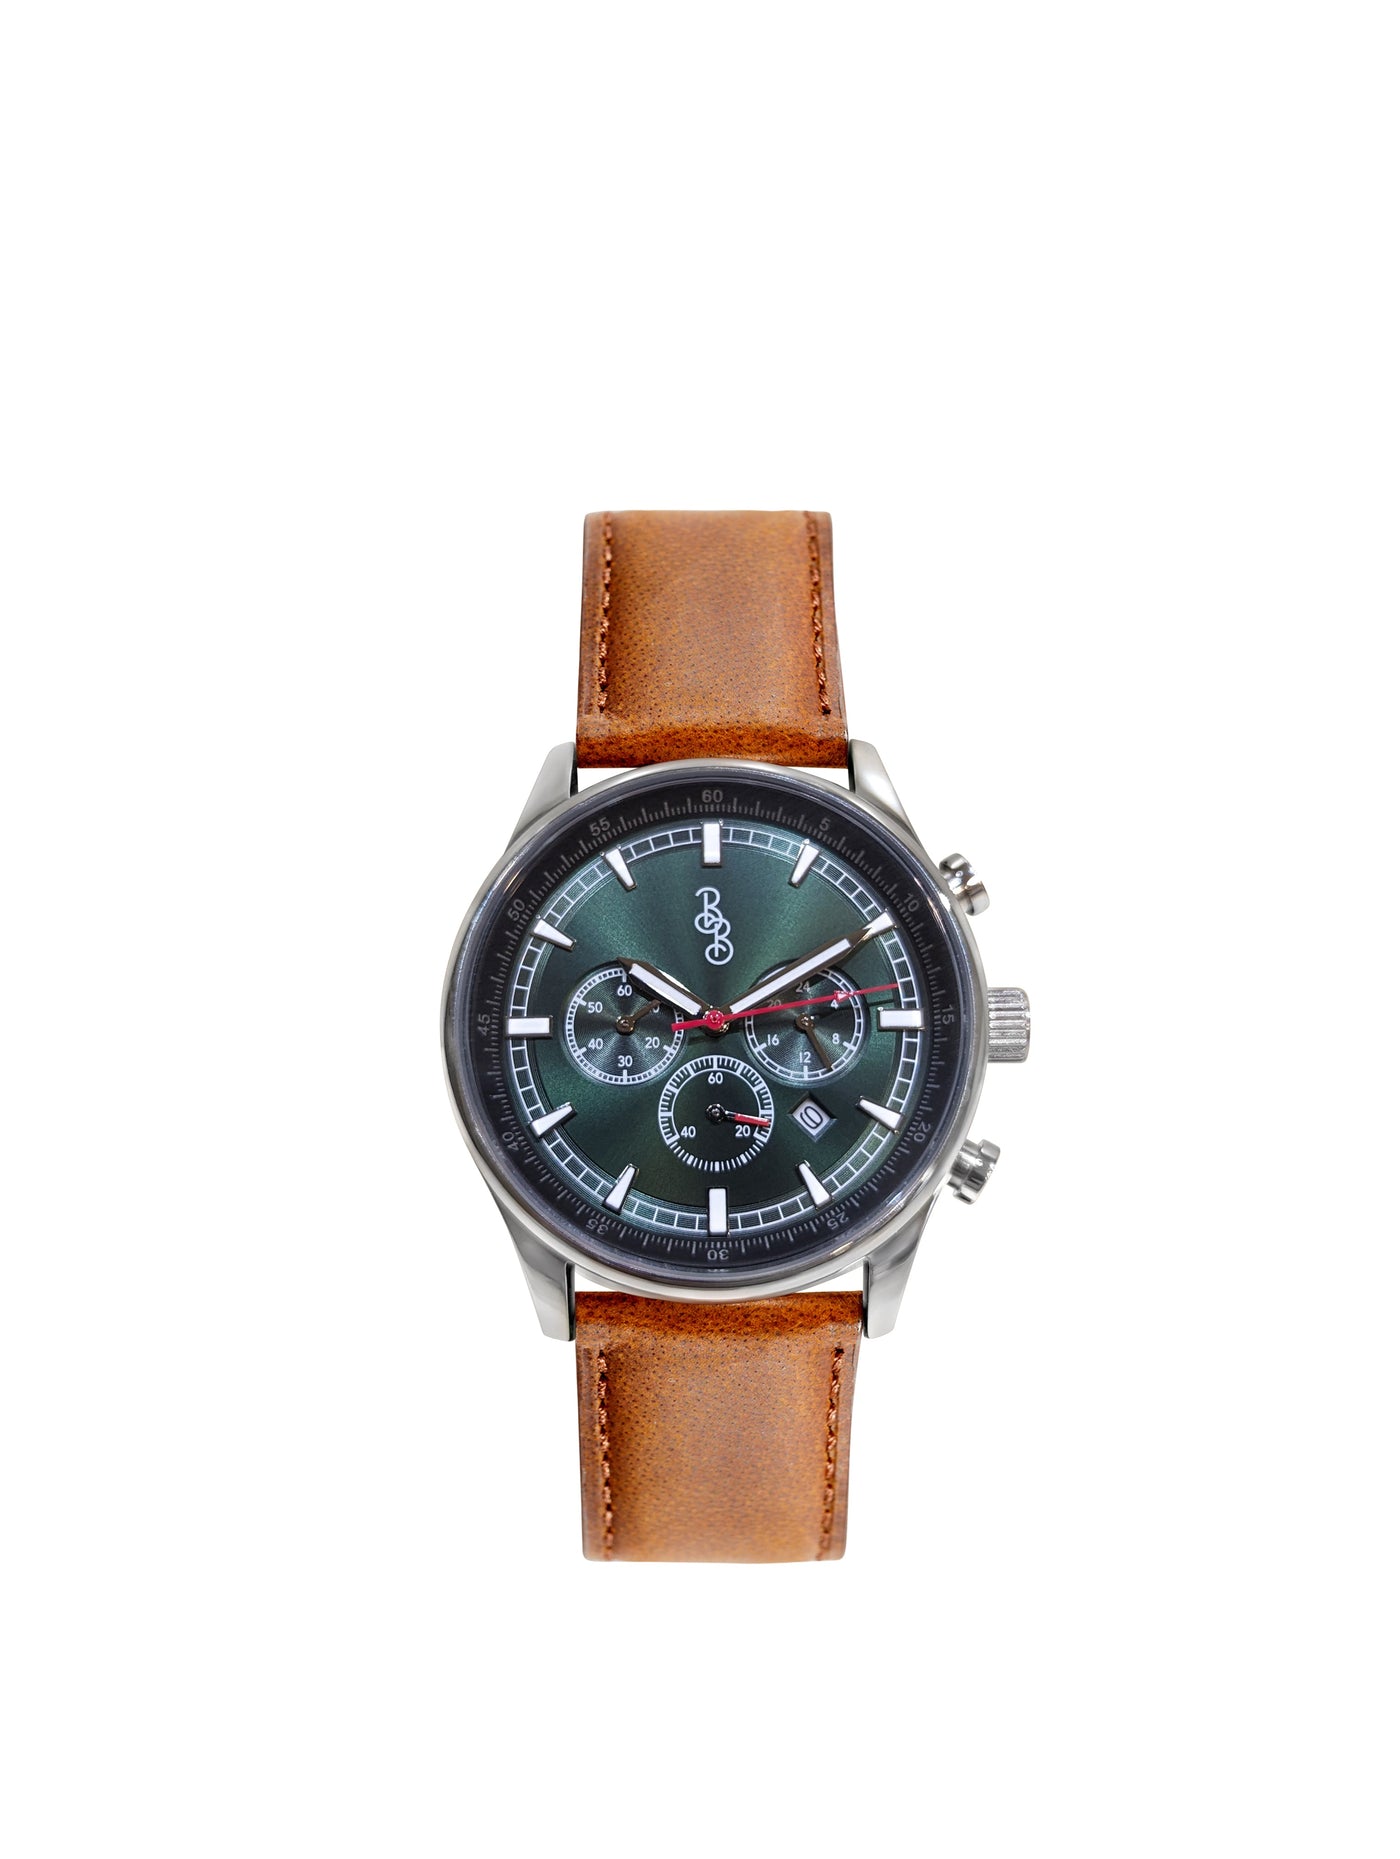 The Beyond Boring Watch Company 41mm Green Sport Chronograph